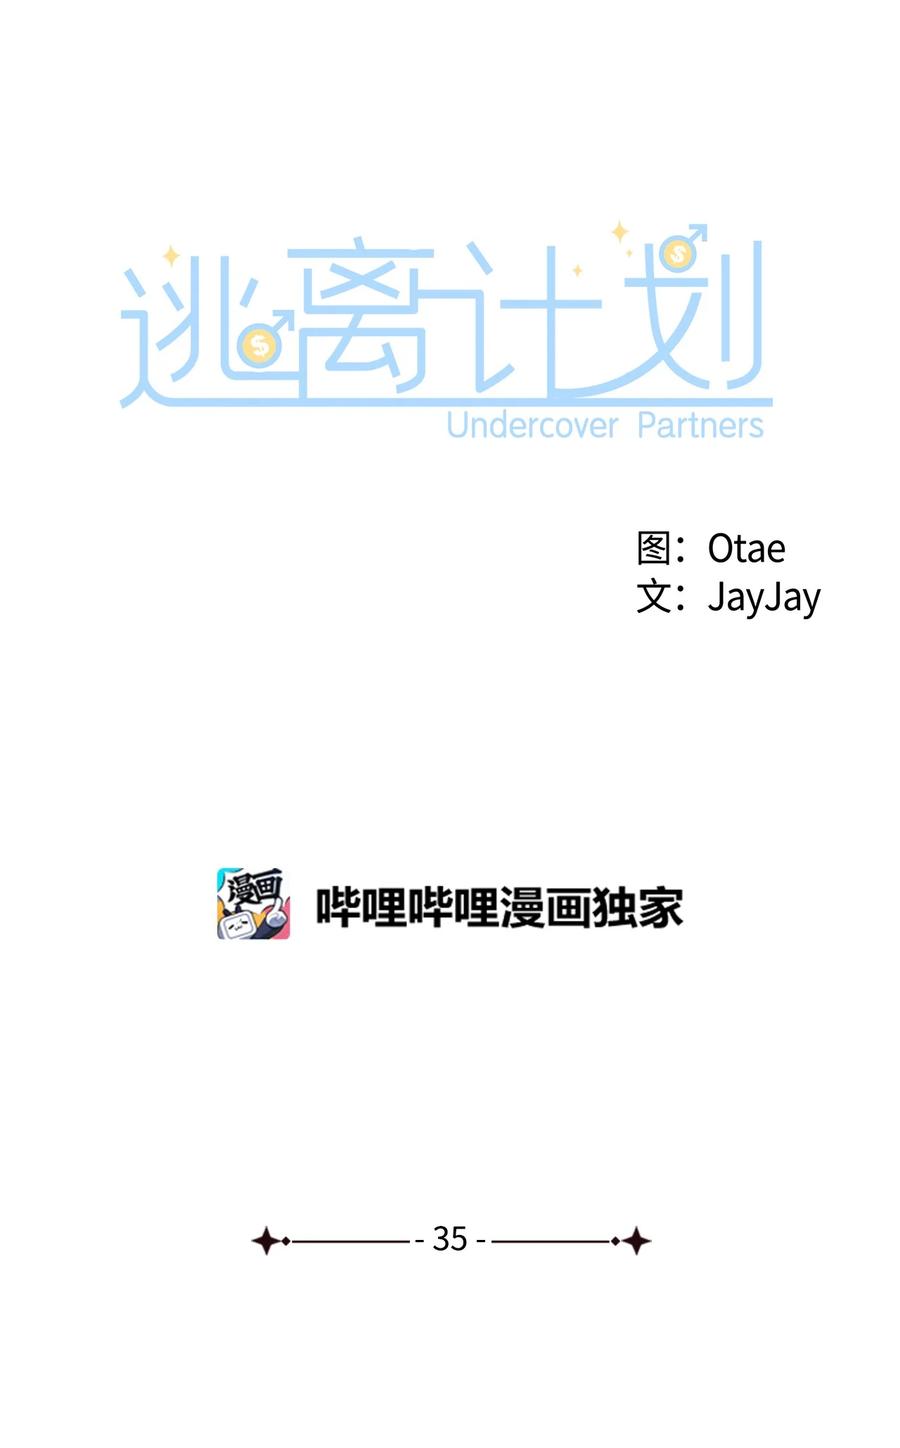 逃離計劃-Undercover Partners - 35 勾心鬥角 - 5